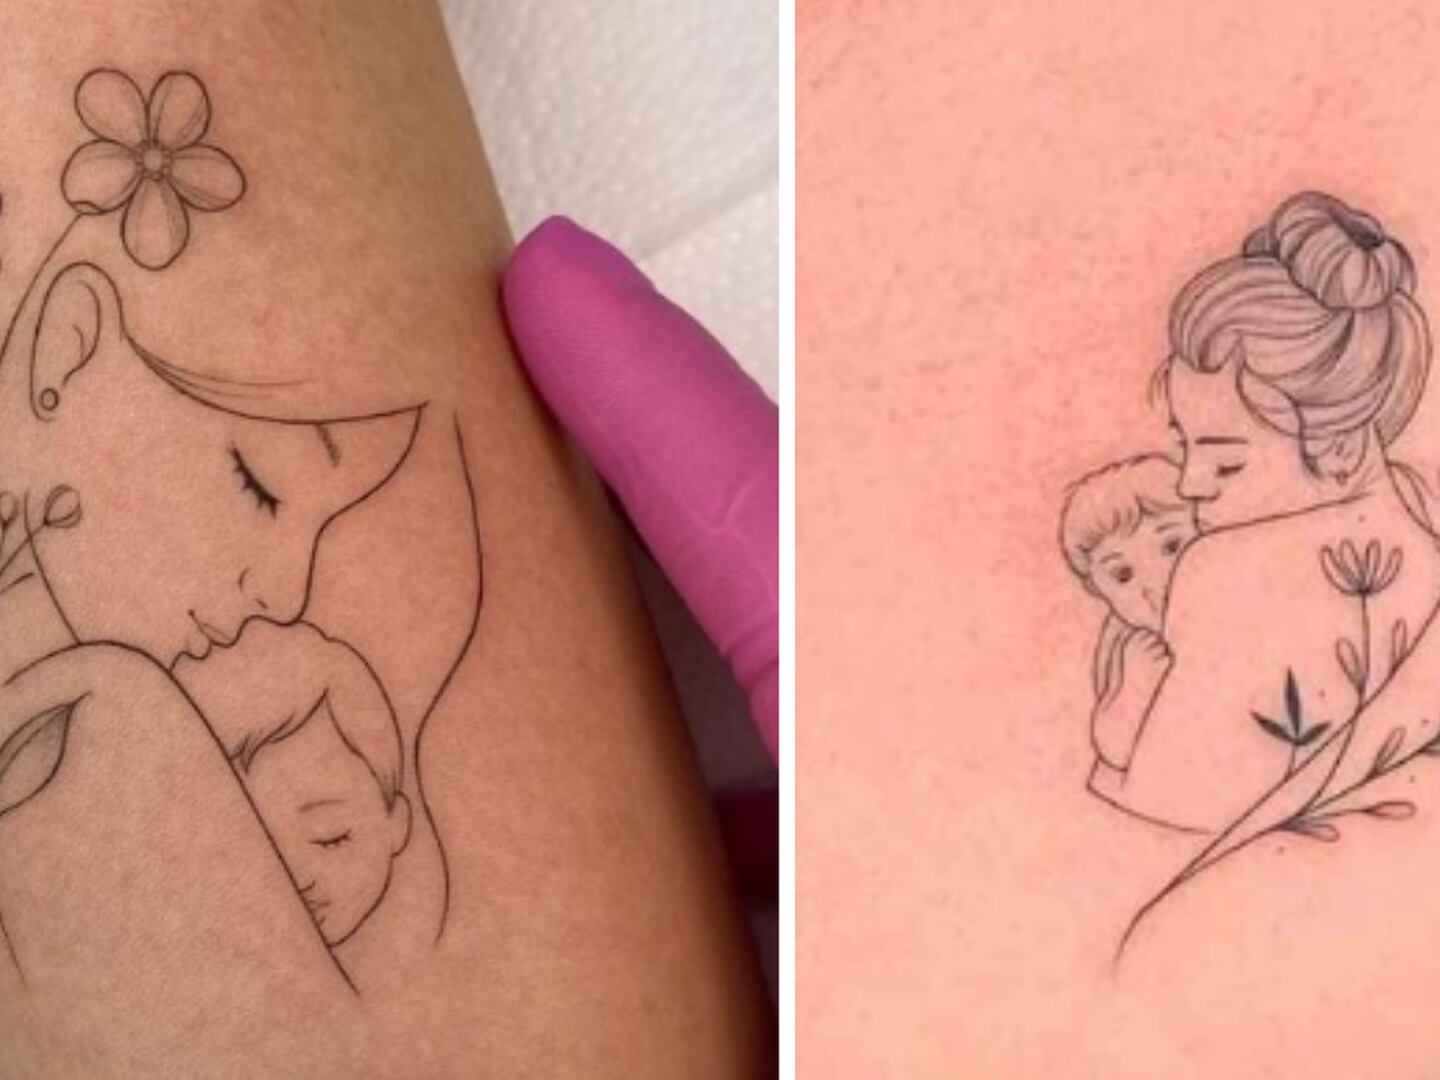 Tatuajes para mujeres que acaban de ser mamás: 3 modelos que reflejan el  amor que sientes